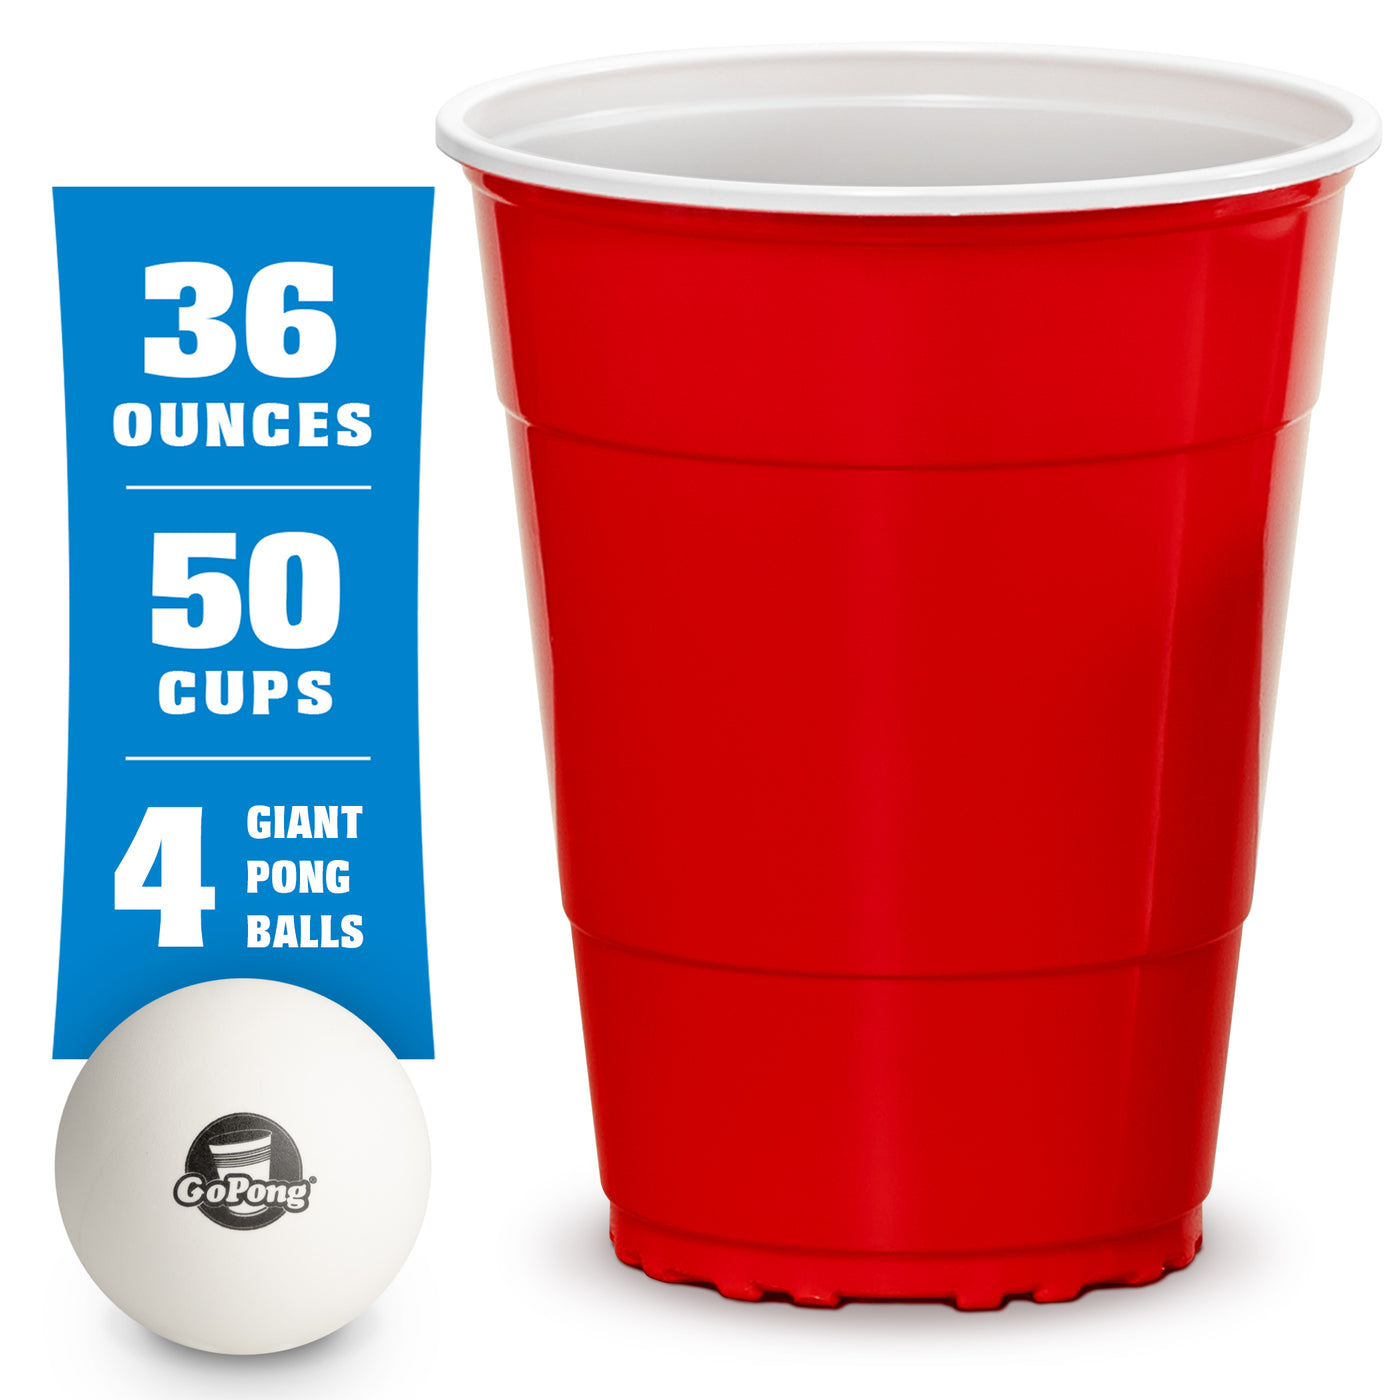 Kit Beer Pong - Original Cup